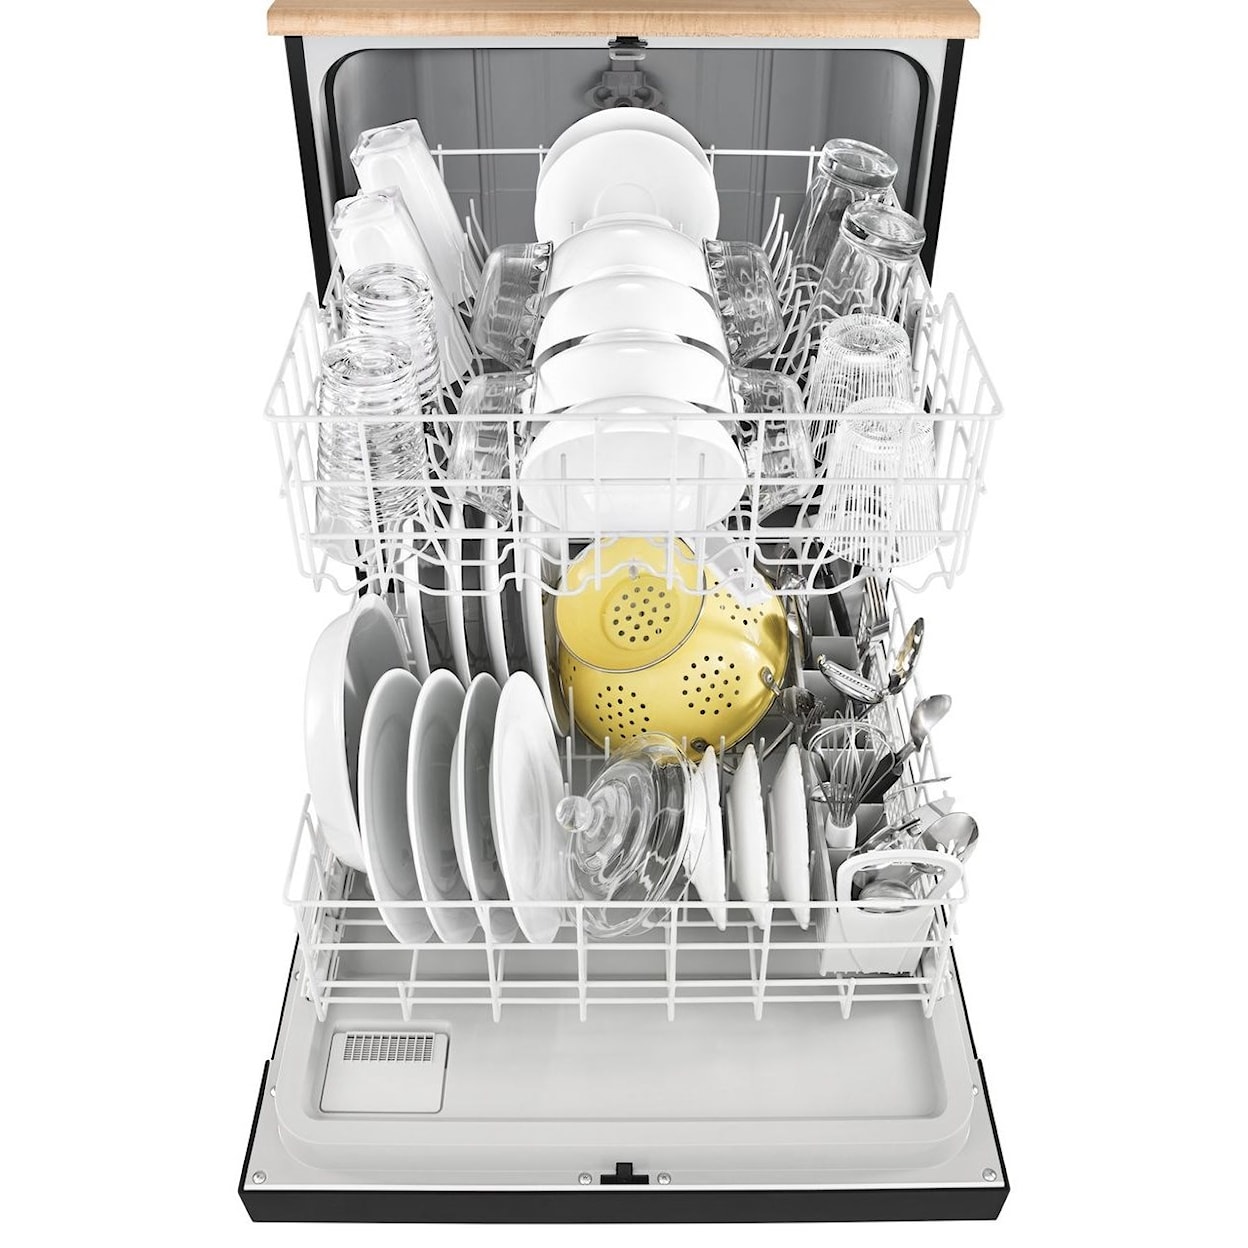 Whirlpool Dishwashers - Whirlpool Heavy-Duty Dishwasher with 1-Hour Wash Cycle